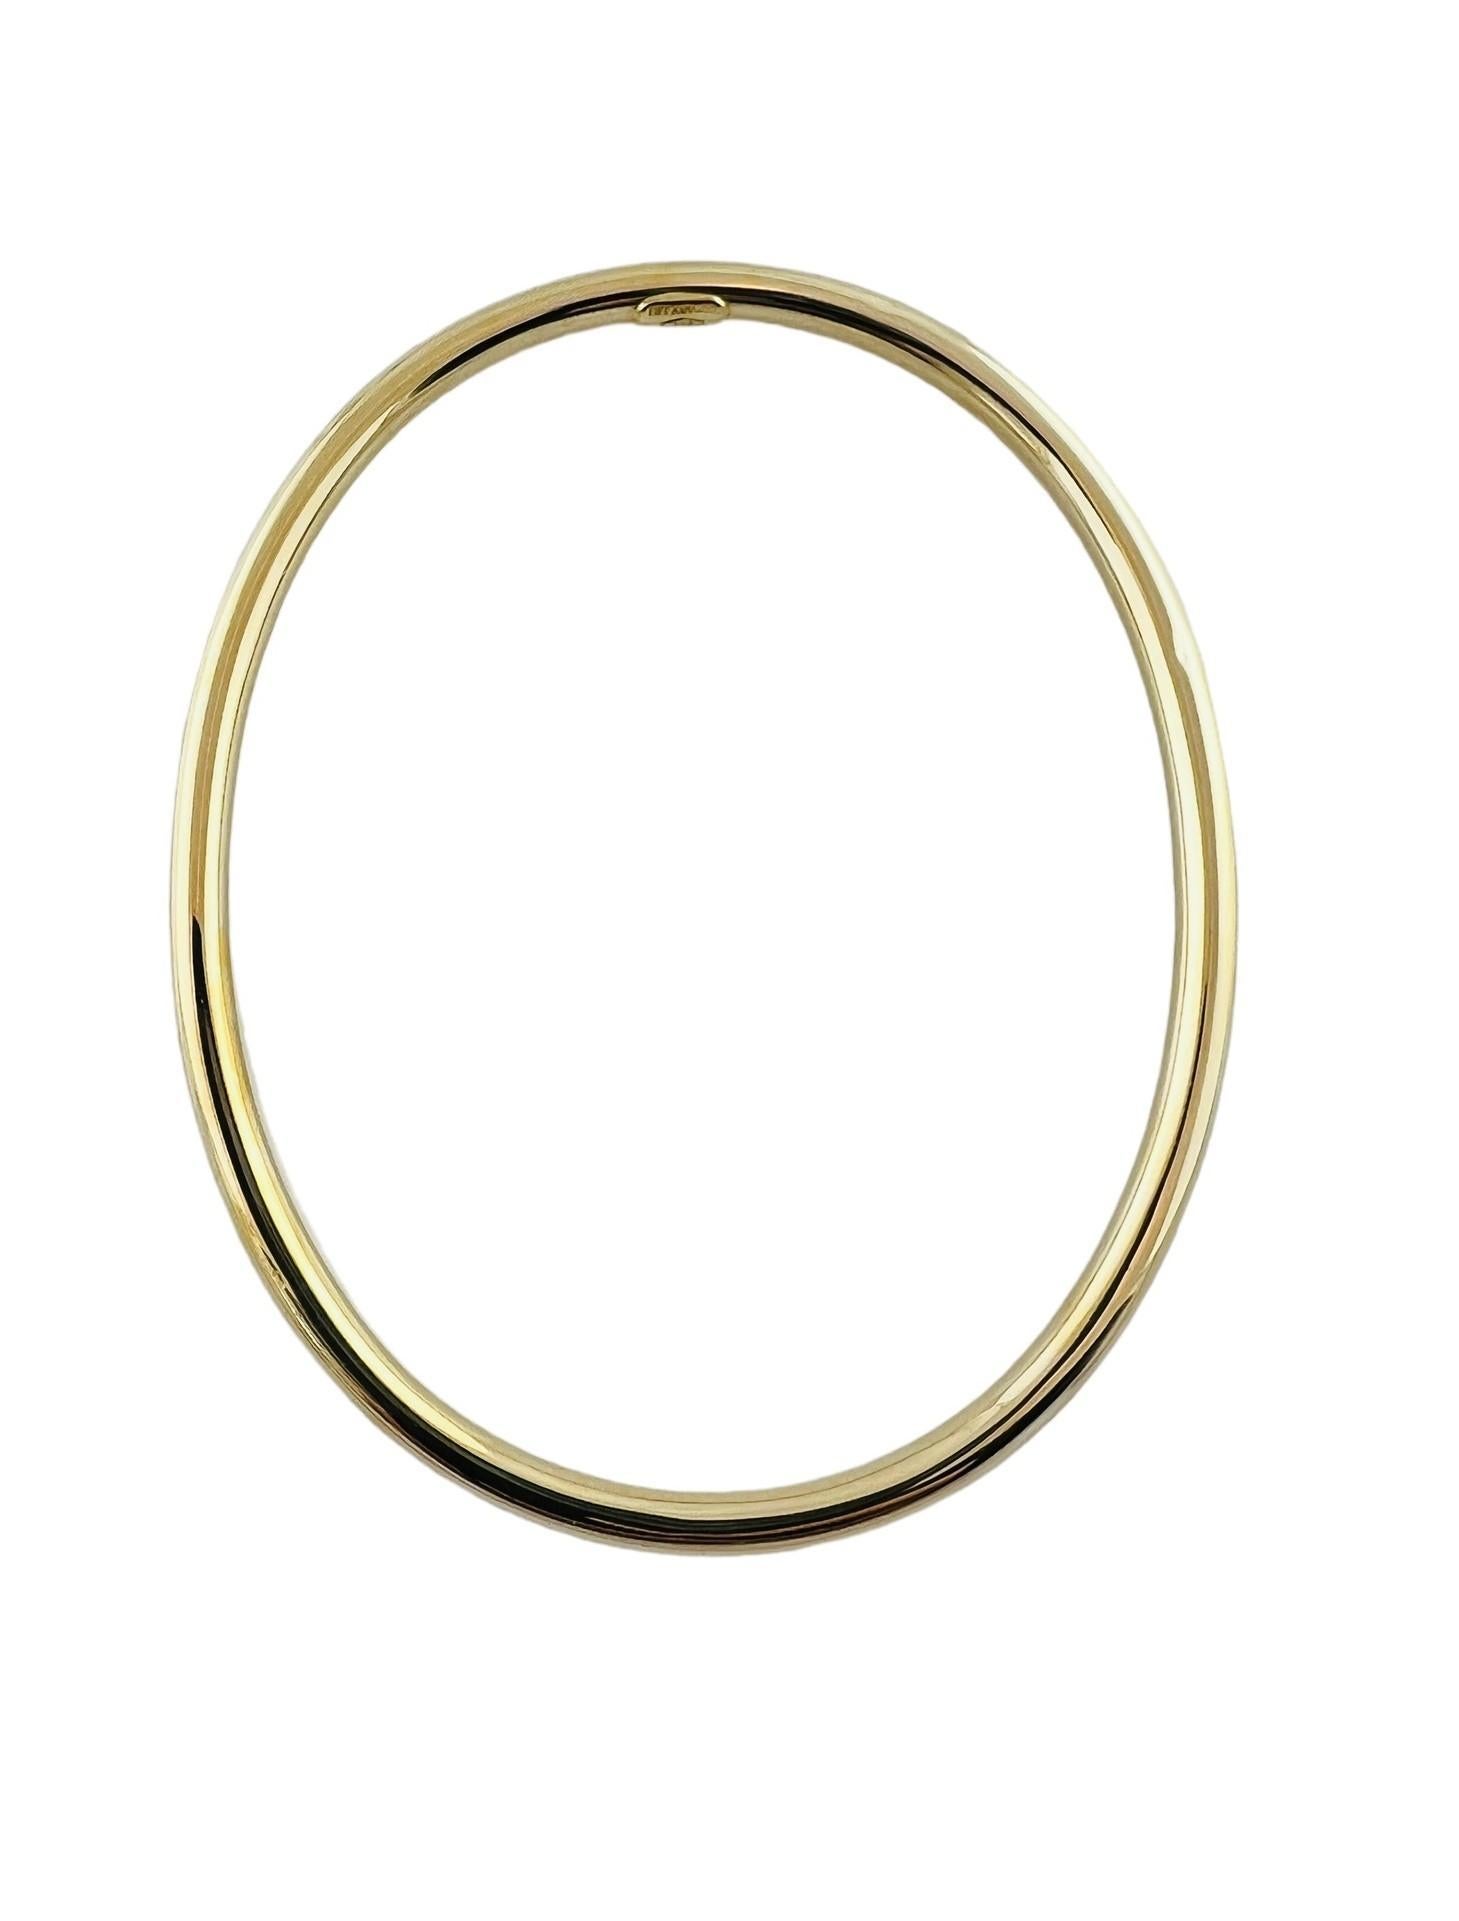 Tiffany & Co. 18K Yellow Gold Oval Bangle Bracelet #16680 2